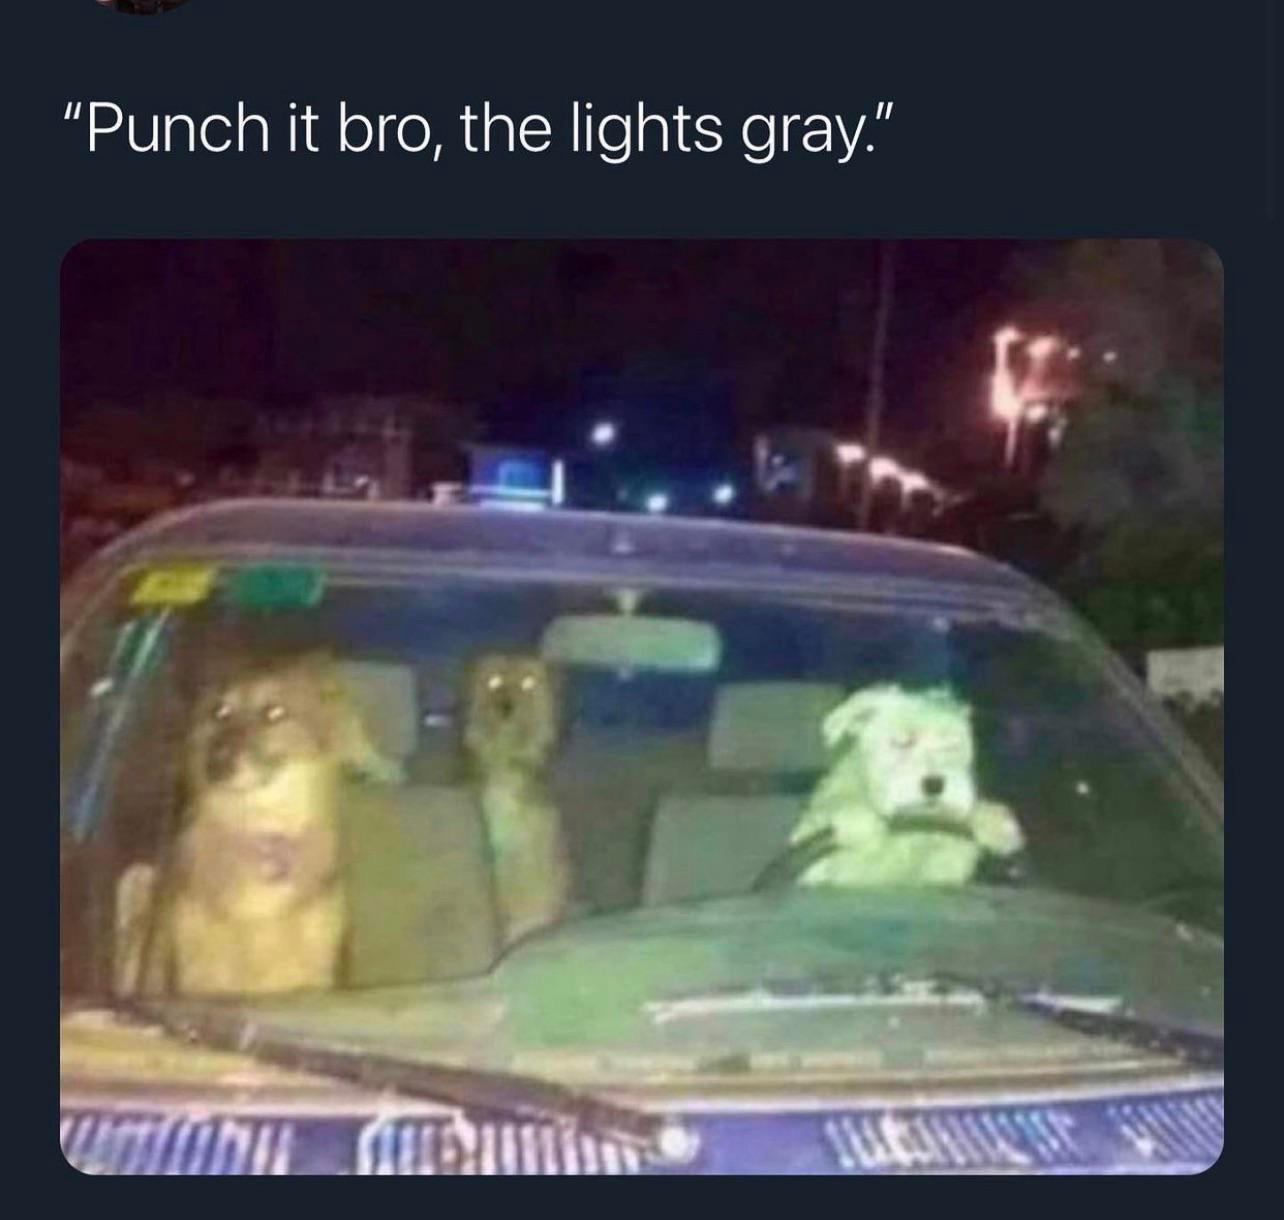 punch it bro the lights grey - "Punch it bro, the lights gray."